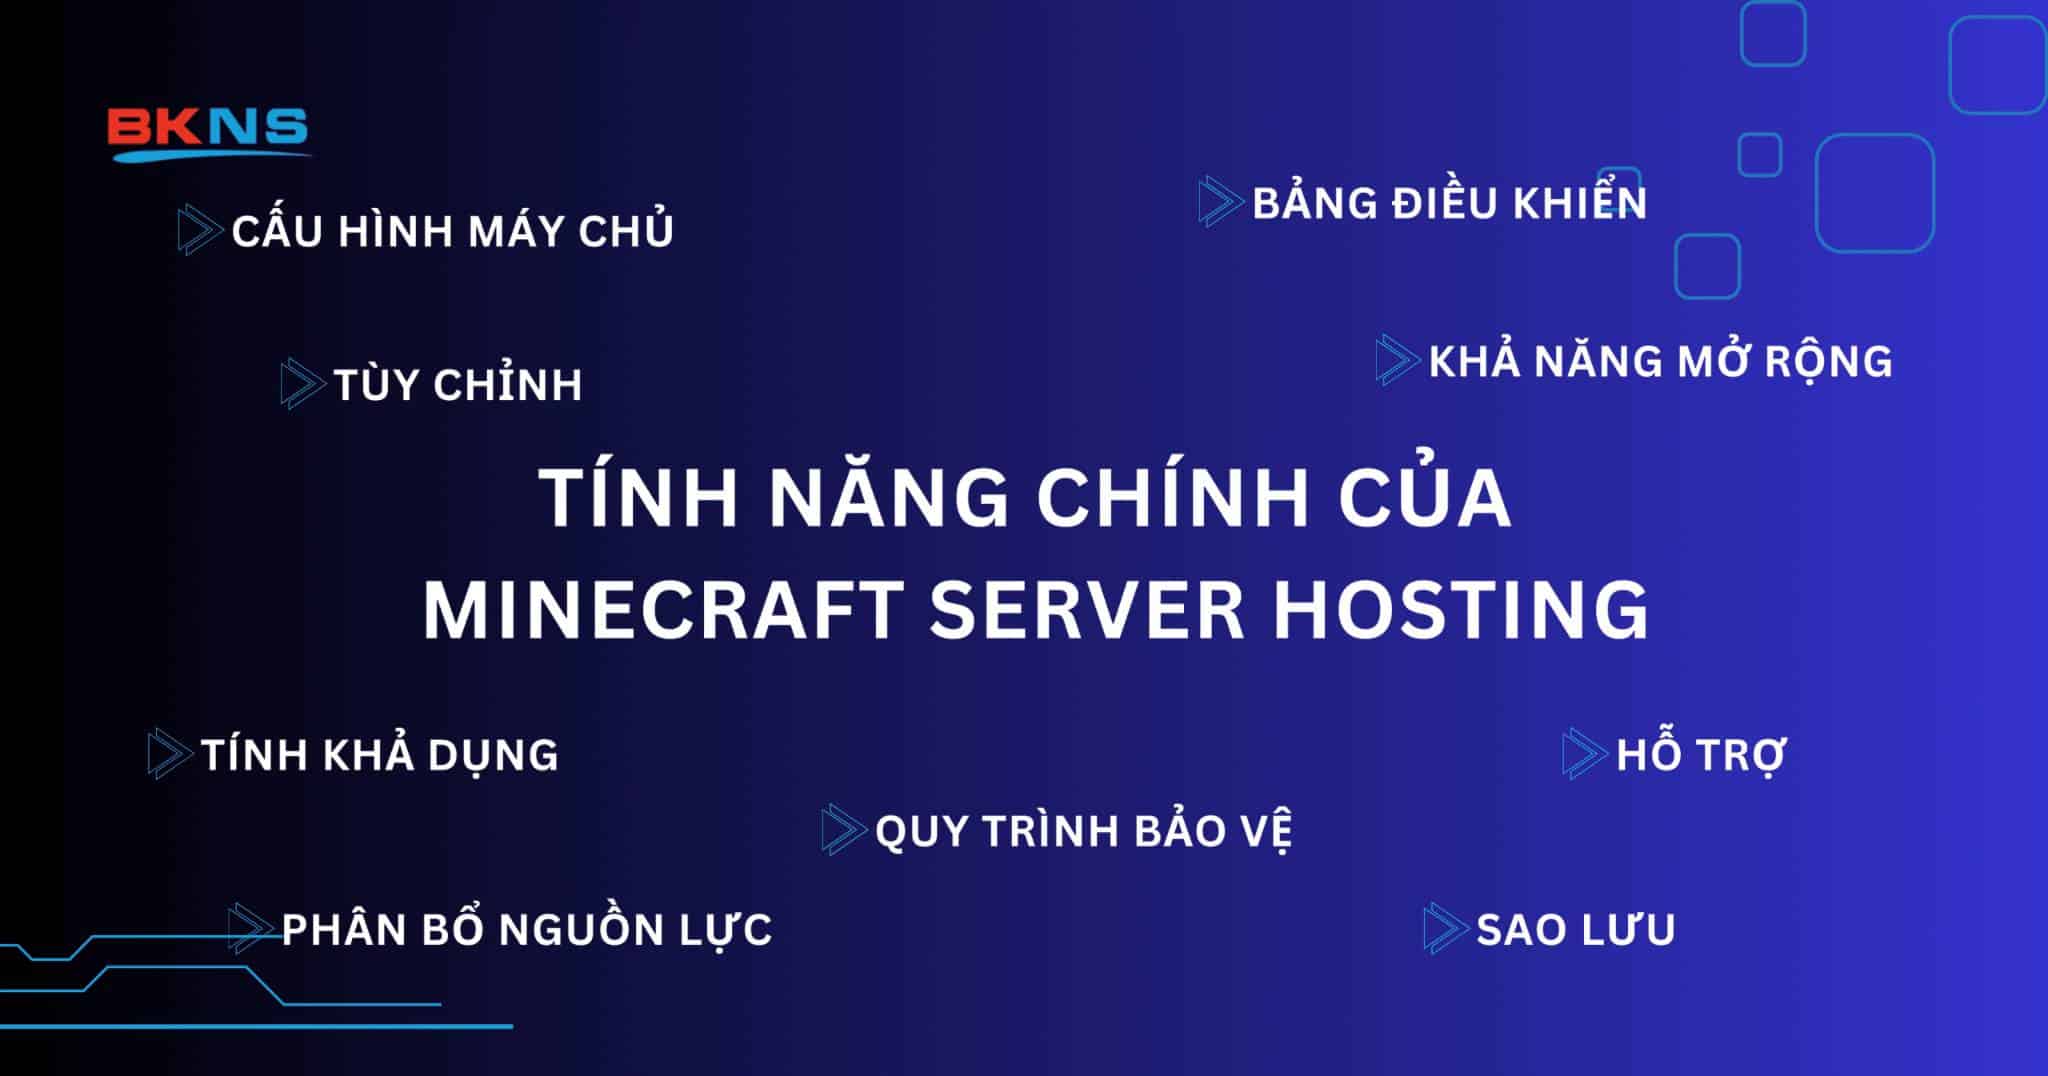 Tính năng chính của Minecraft Server Hosting